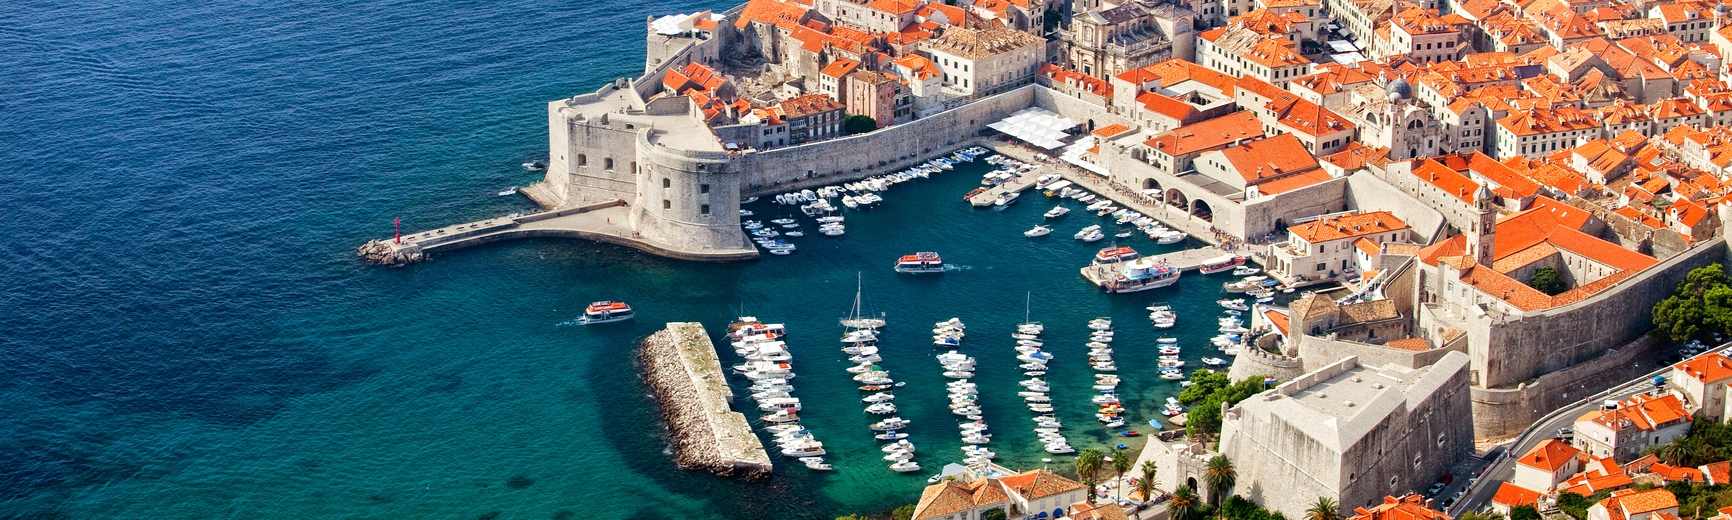 Dubrovnik, Croazia: veduta panoramica